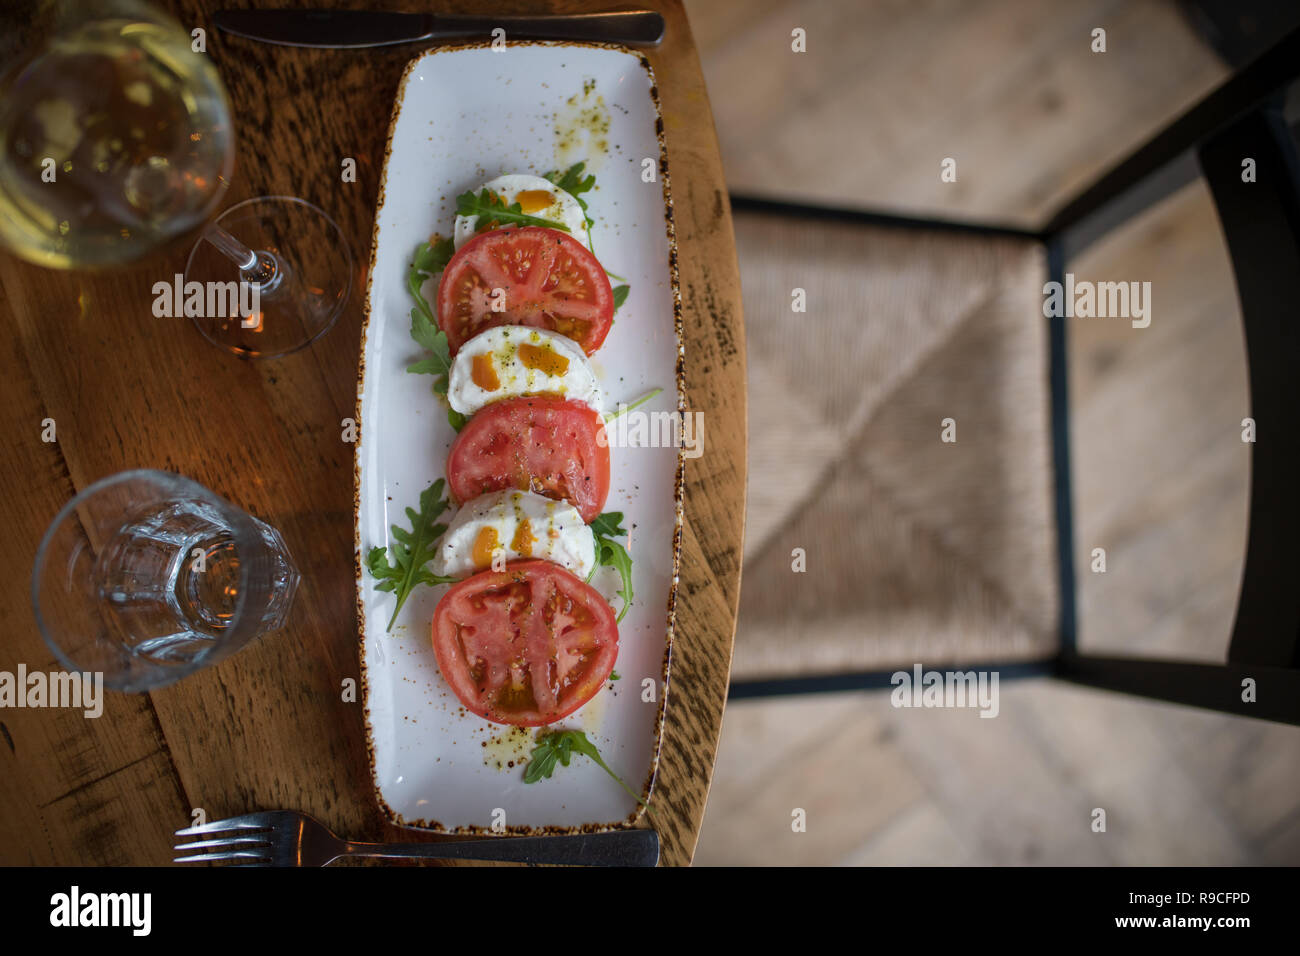 Tomato and Mozzarella on plate Stock Photo